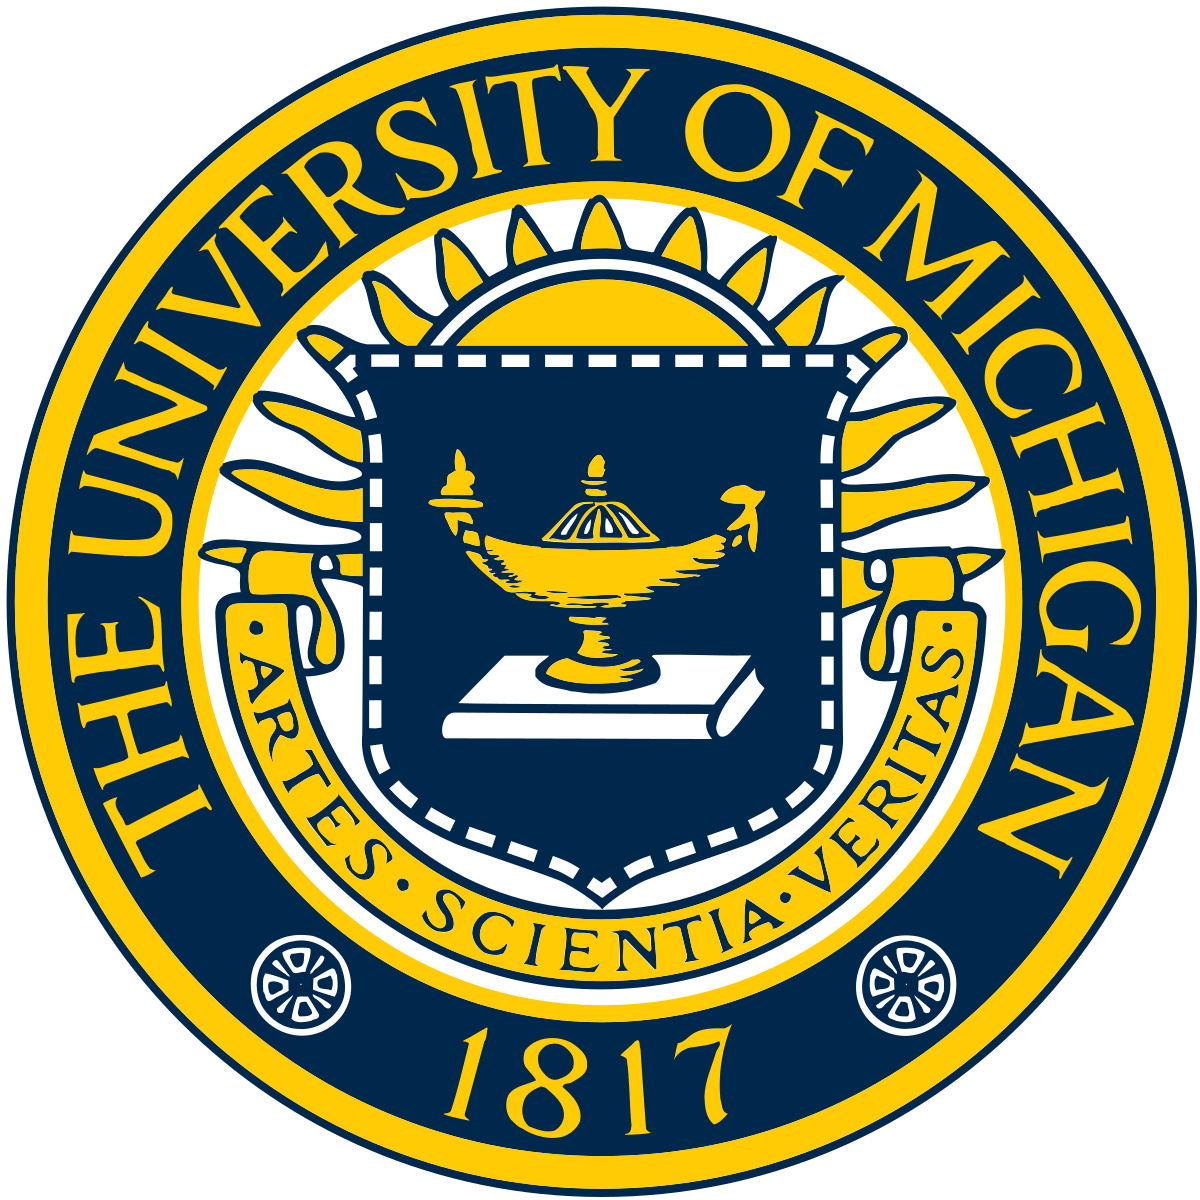 The university of MICHIGHAN